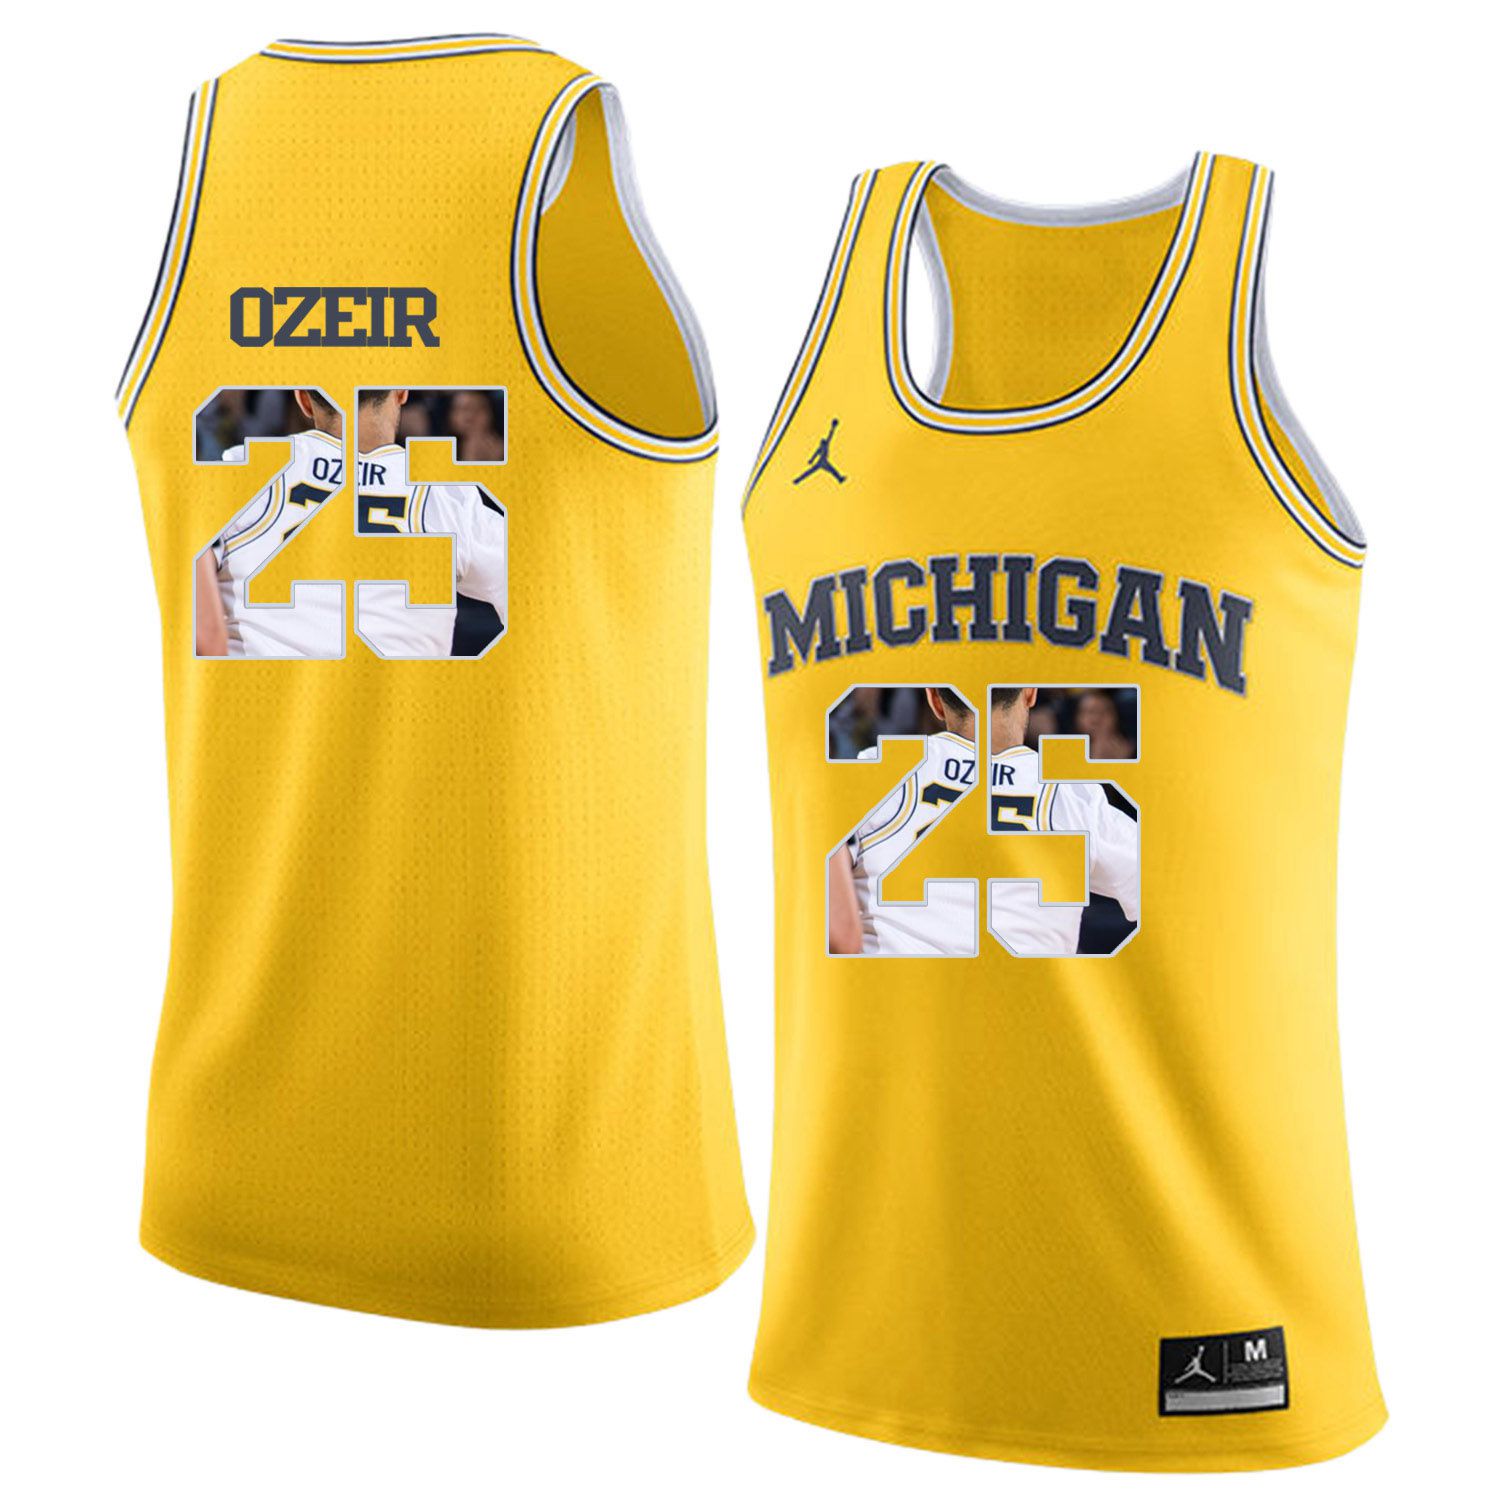 Men Jordan University of Michigan Basketball Yellow #25 Ozeir Fashion Edition Customized NCAA Jerseys->customized ncaa jersey->Custom Jersey